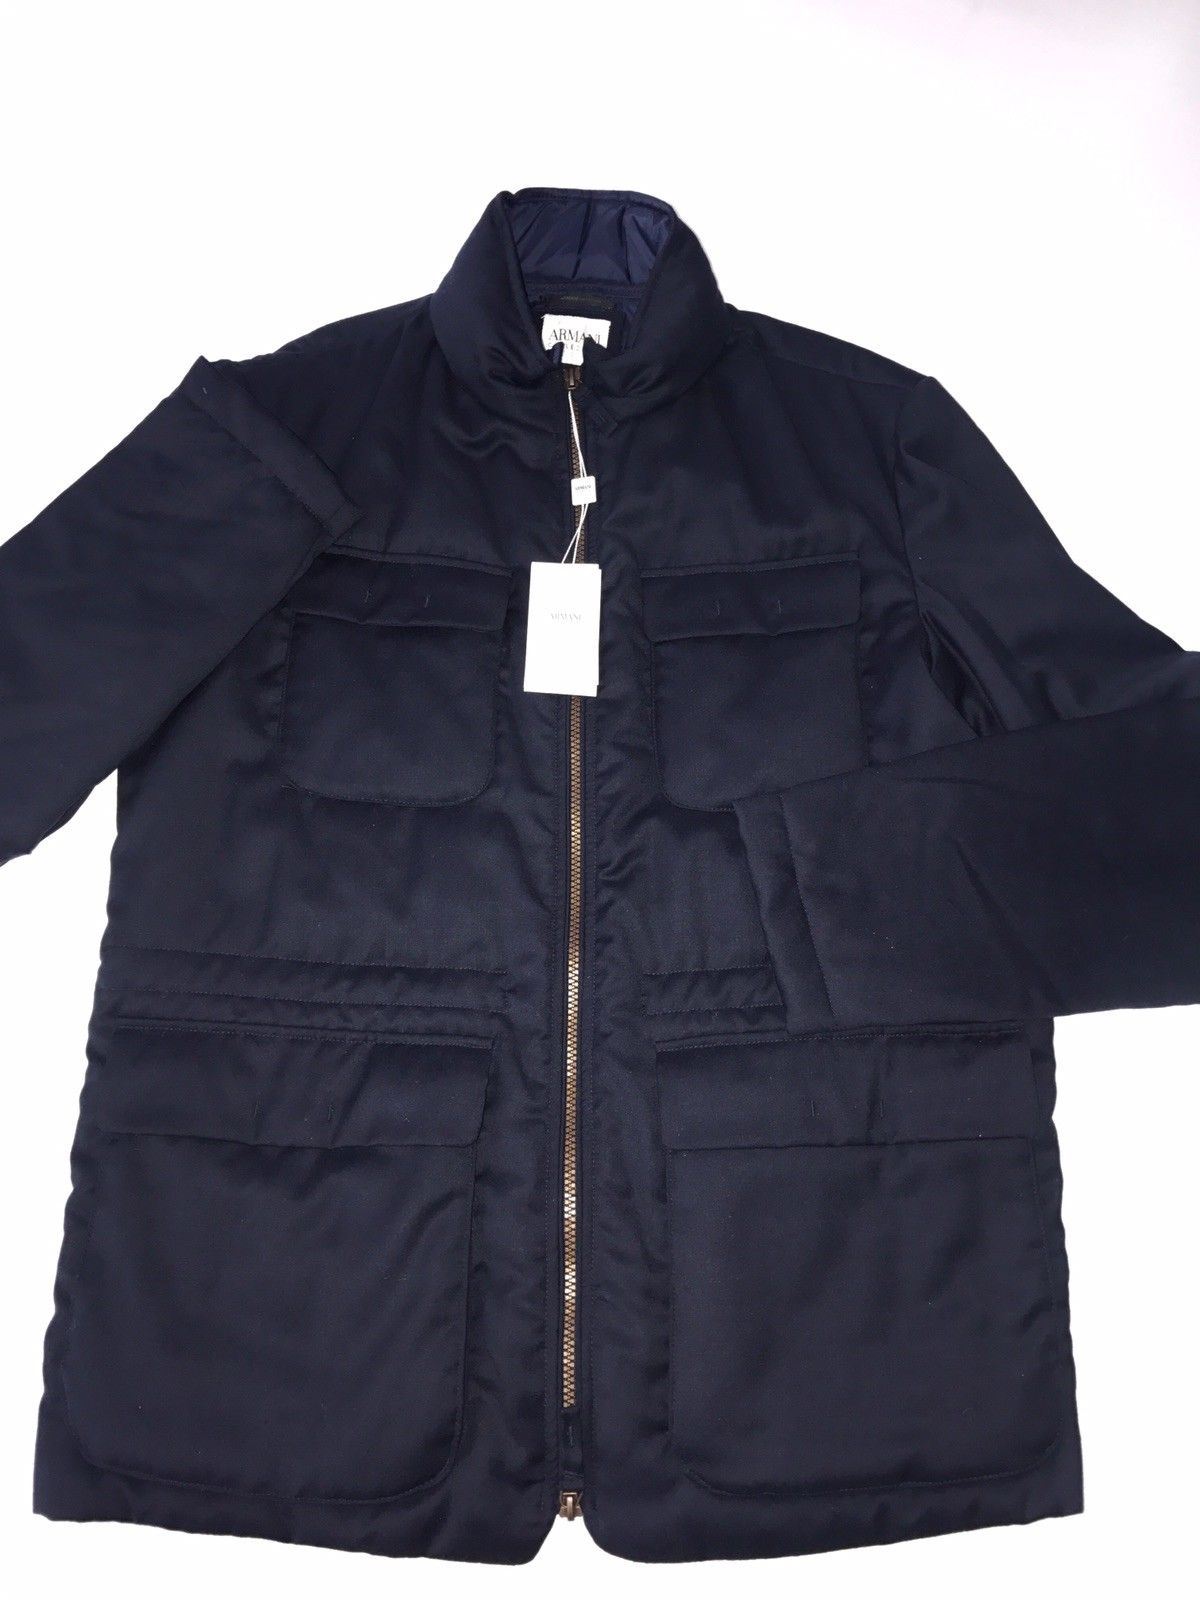 NWT $1045 Armani Collezioni Wool Navy Blue Sport Jacket 44 US (54 Eu) PCG07W